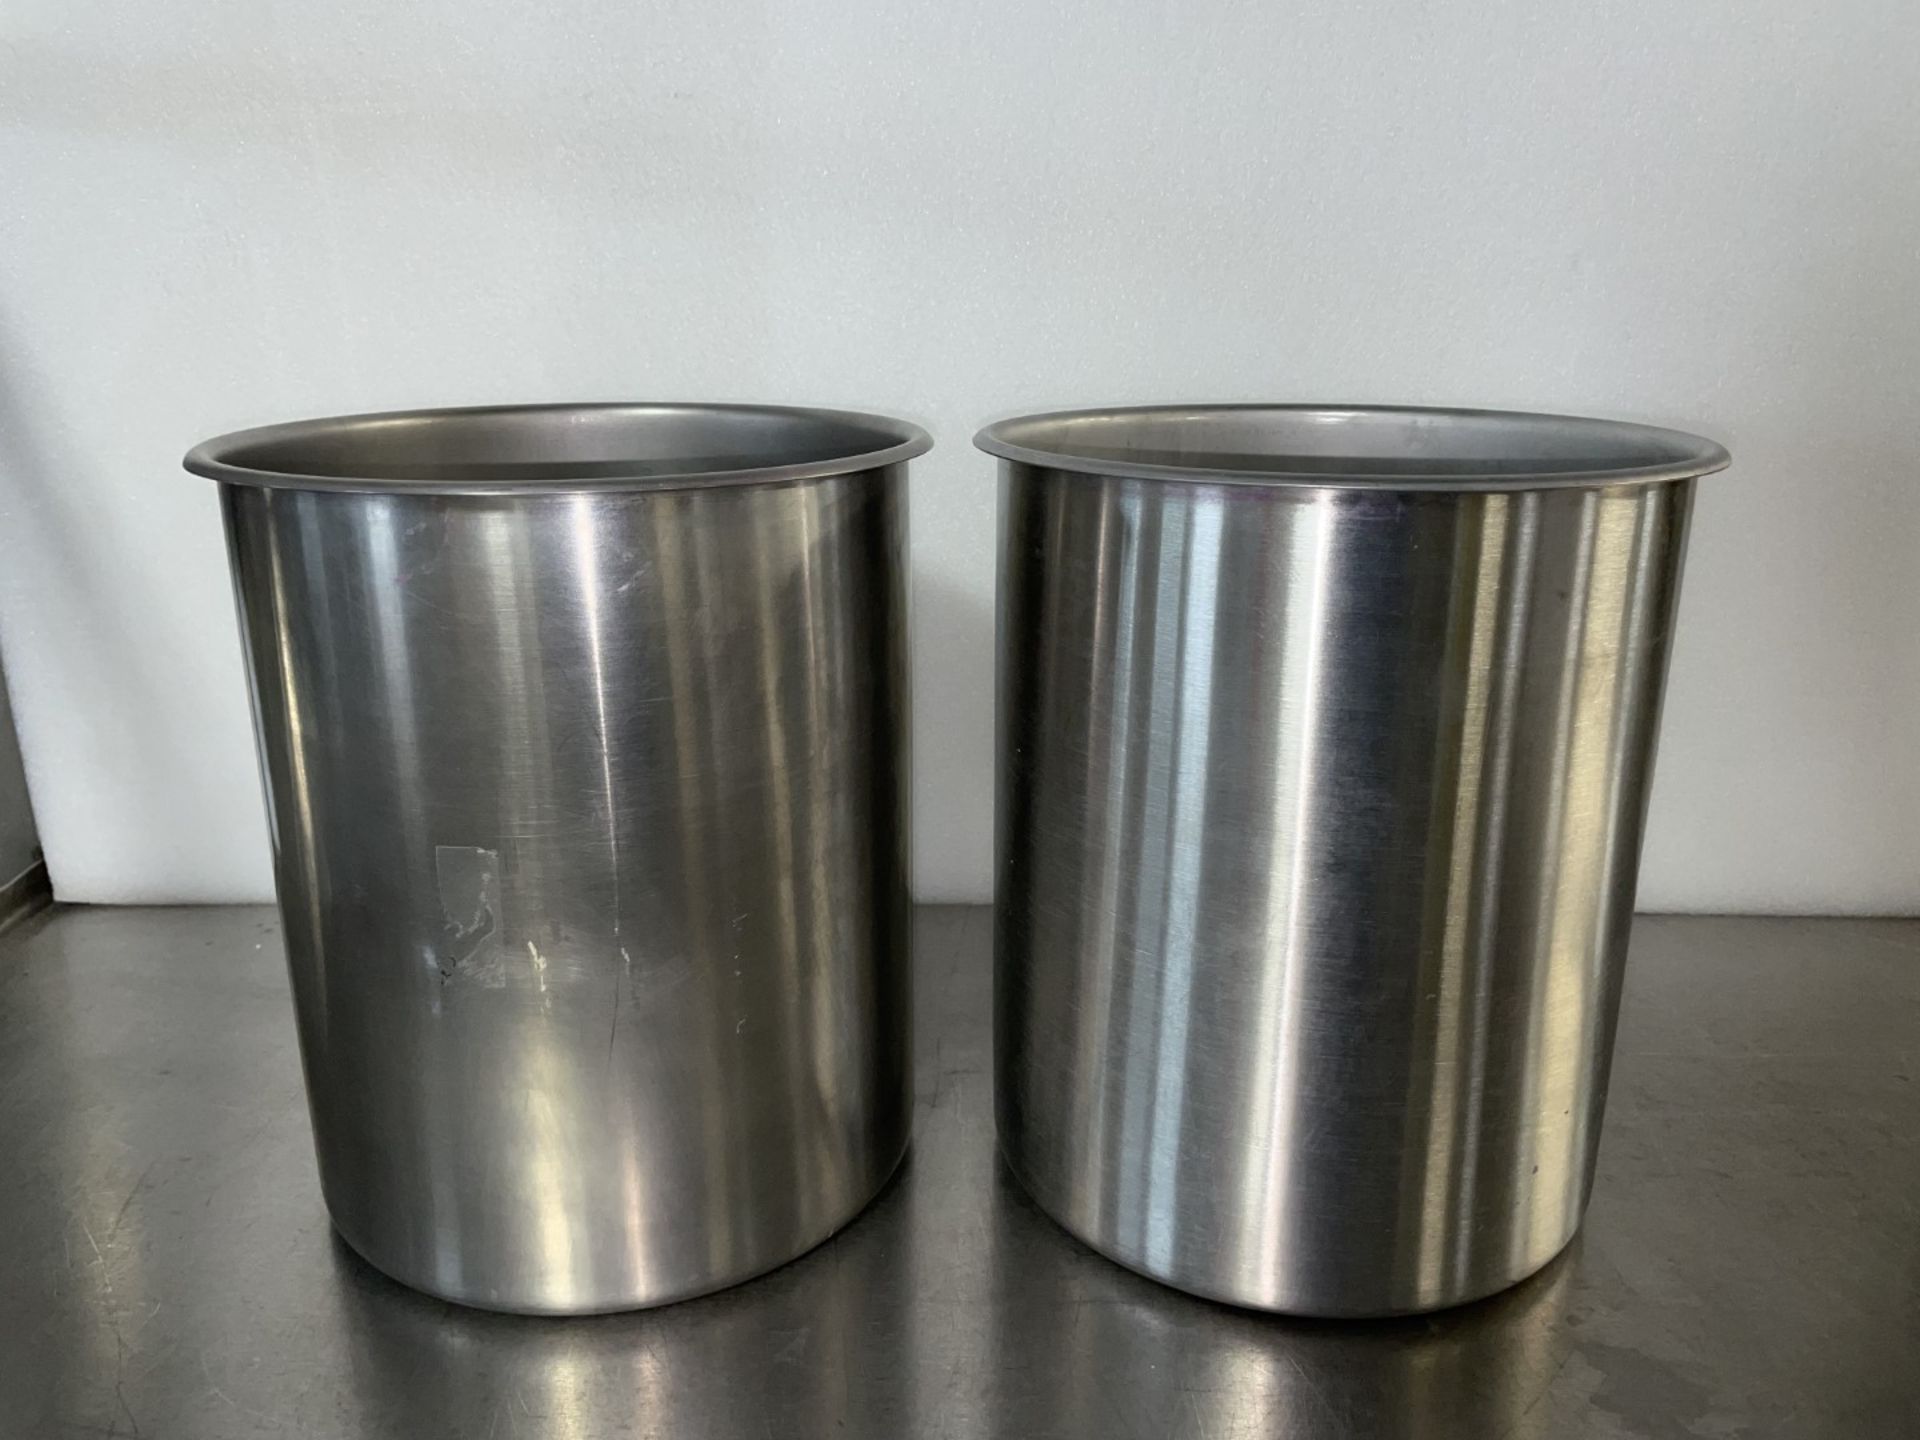 12.125 qt/11.47 L Polar Ware Stainless Steel Beaker 300 Series Model 12Y